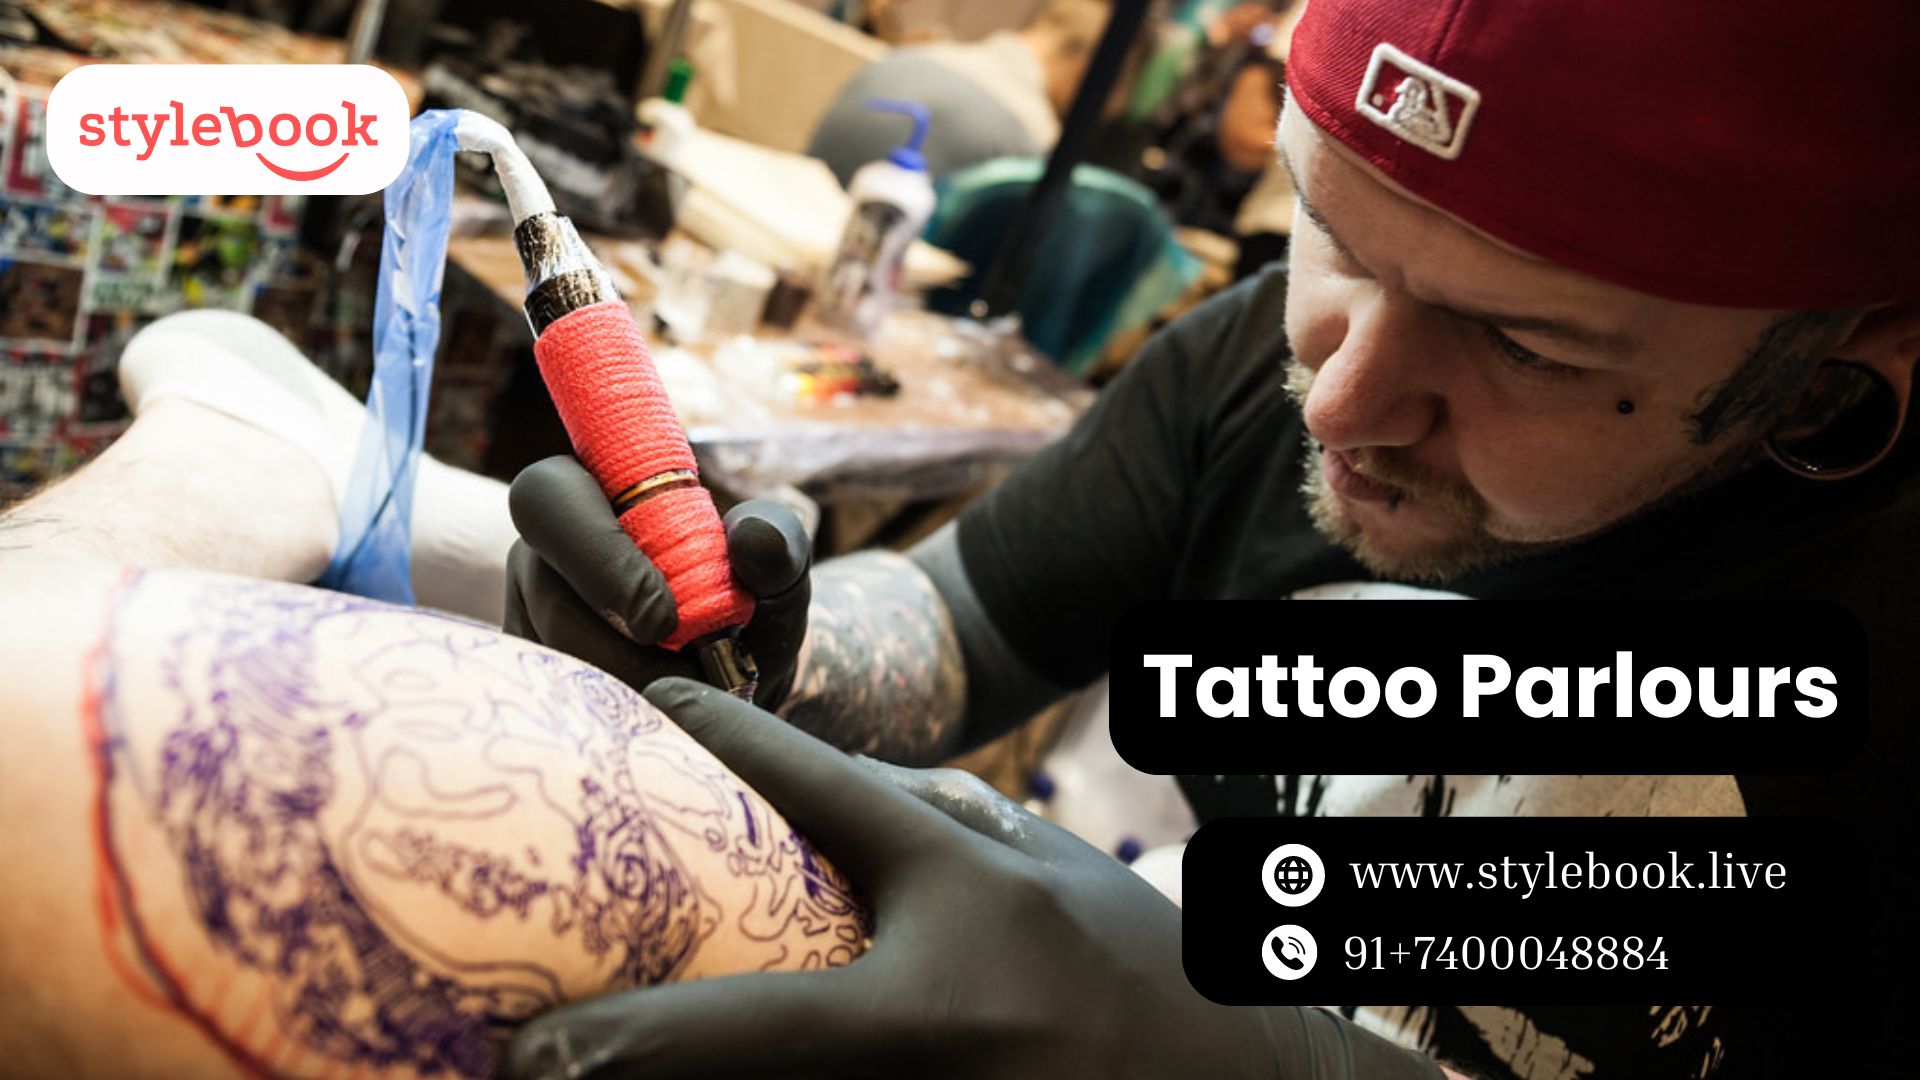  Find Your Ink: Explore Top Tattoo Studios